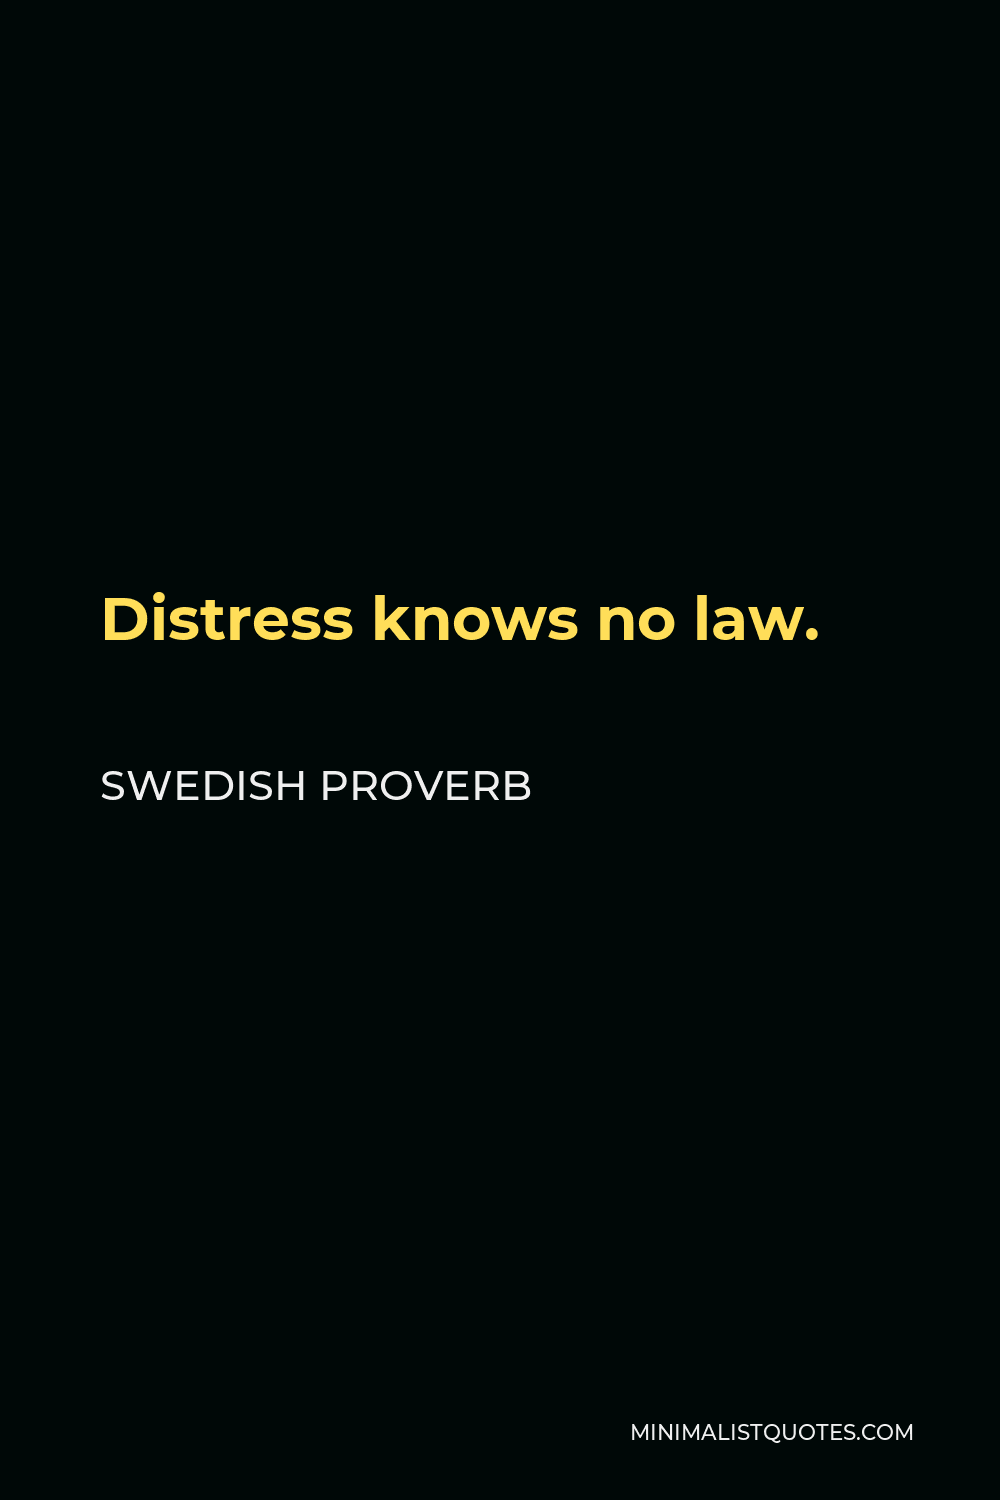 Swedish Proverb Quote - Distress knows no law.